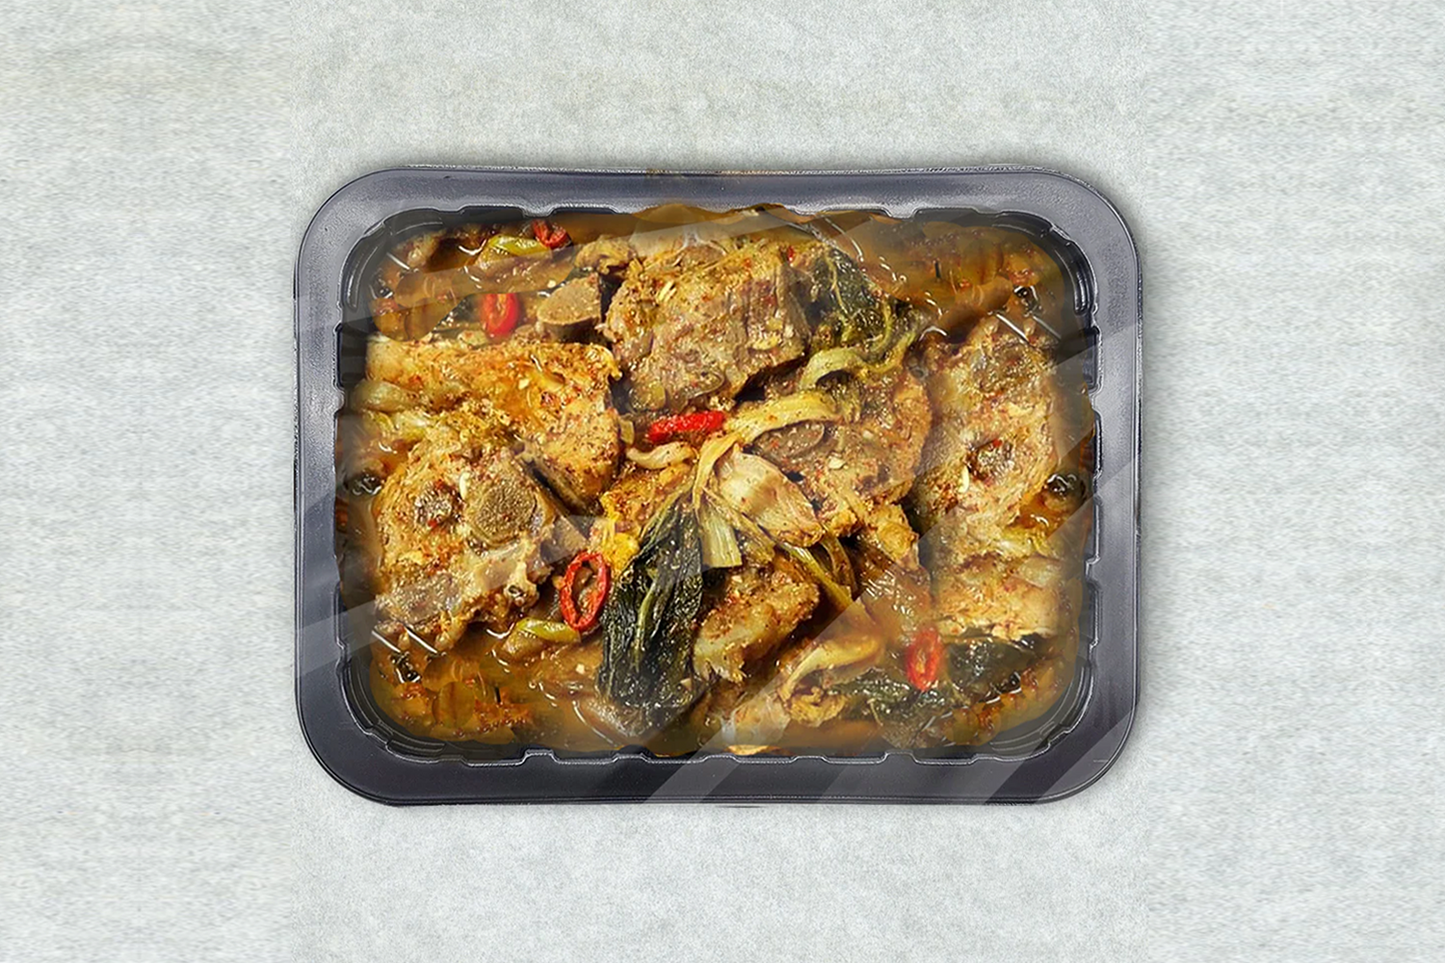 Galbi Ugeojitang (Cabbage and Short Rib Soup)